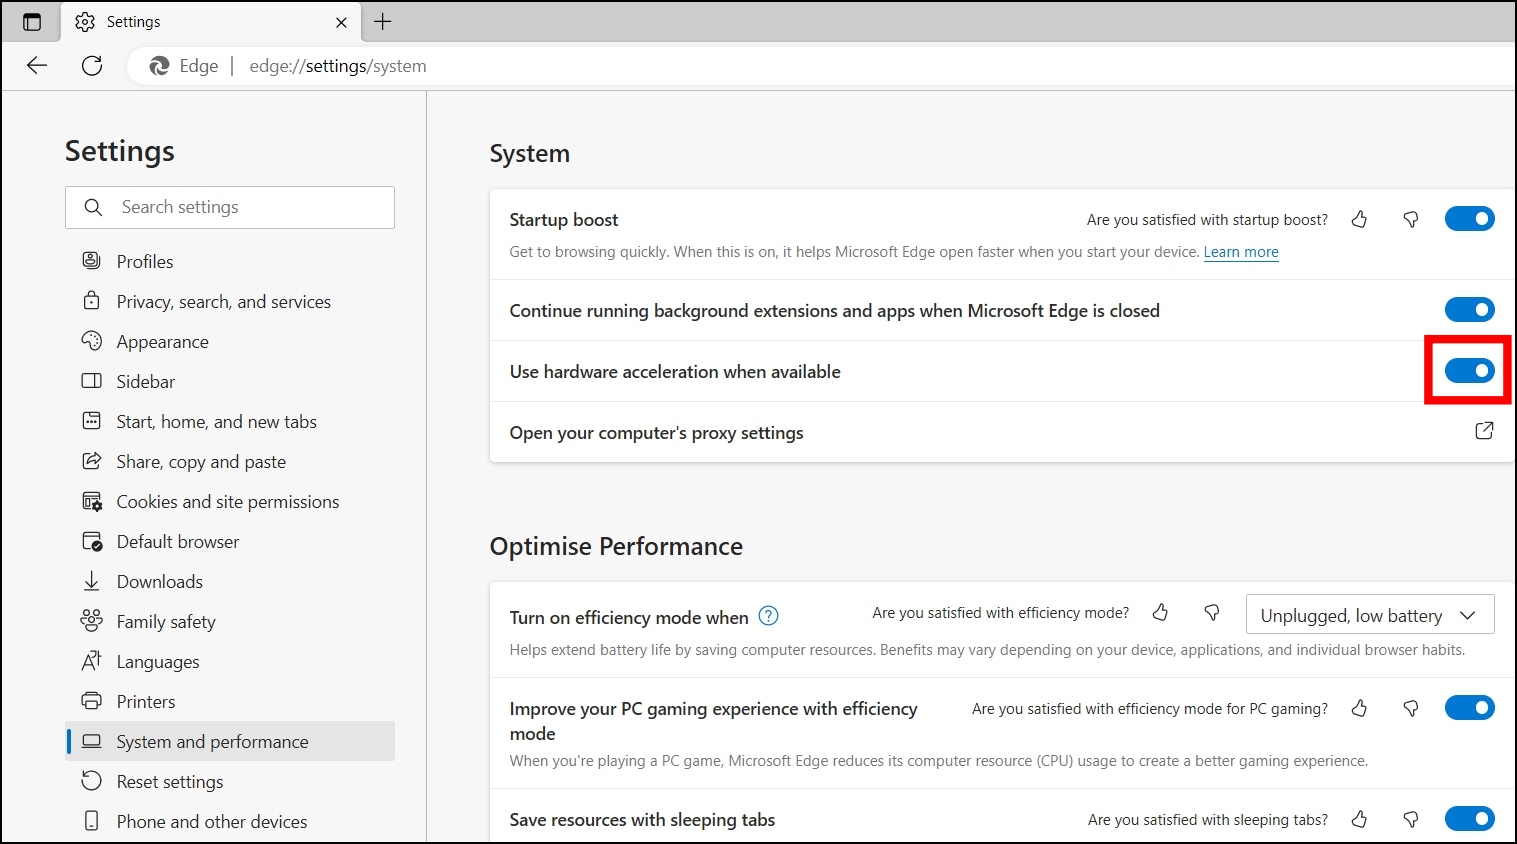 Using Microsoft Edge's Settings